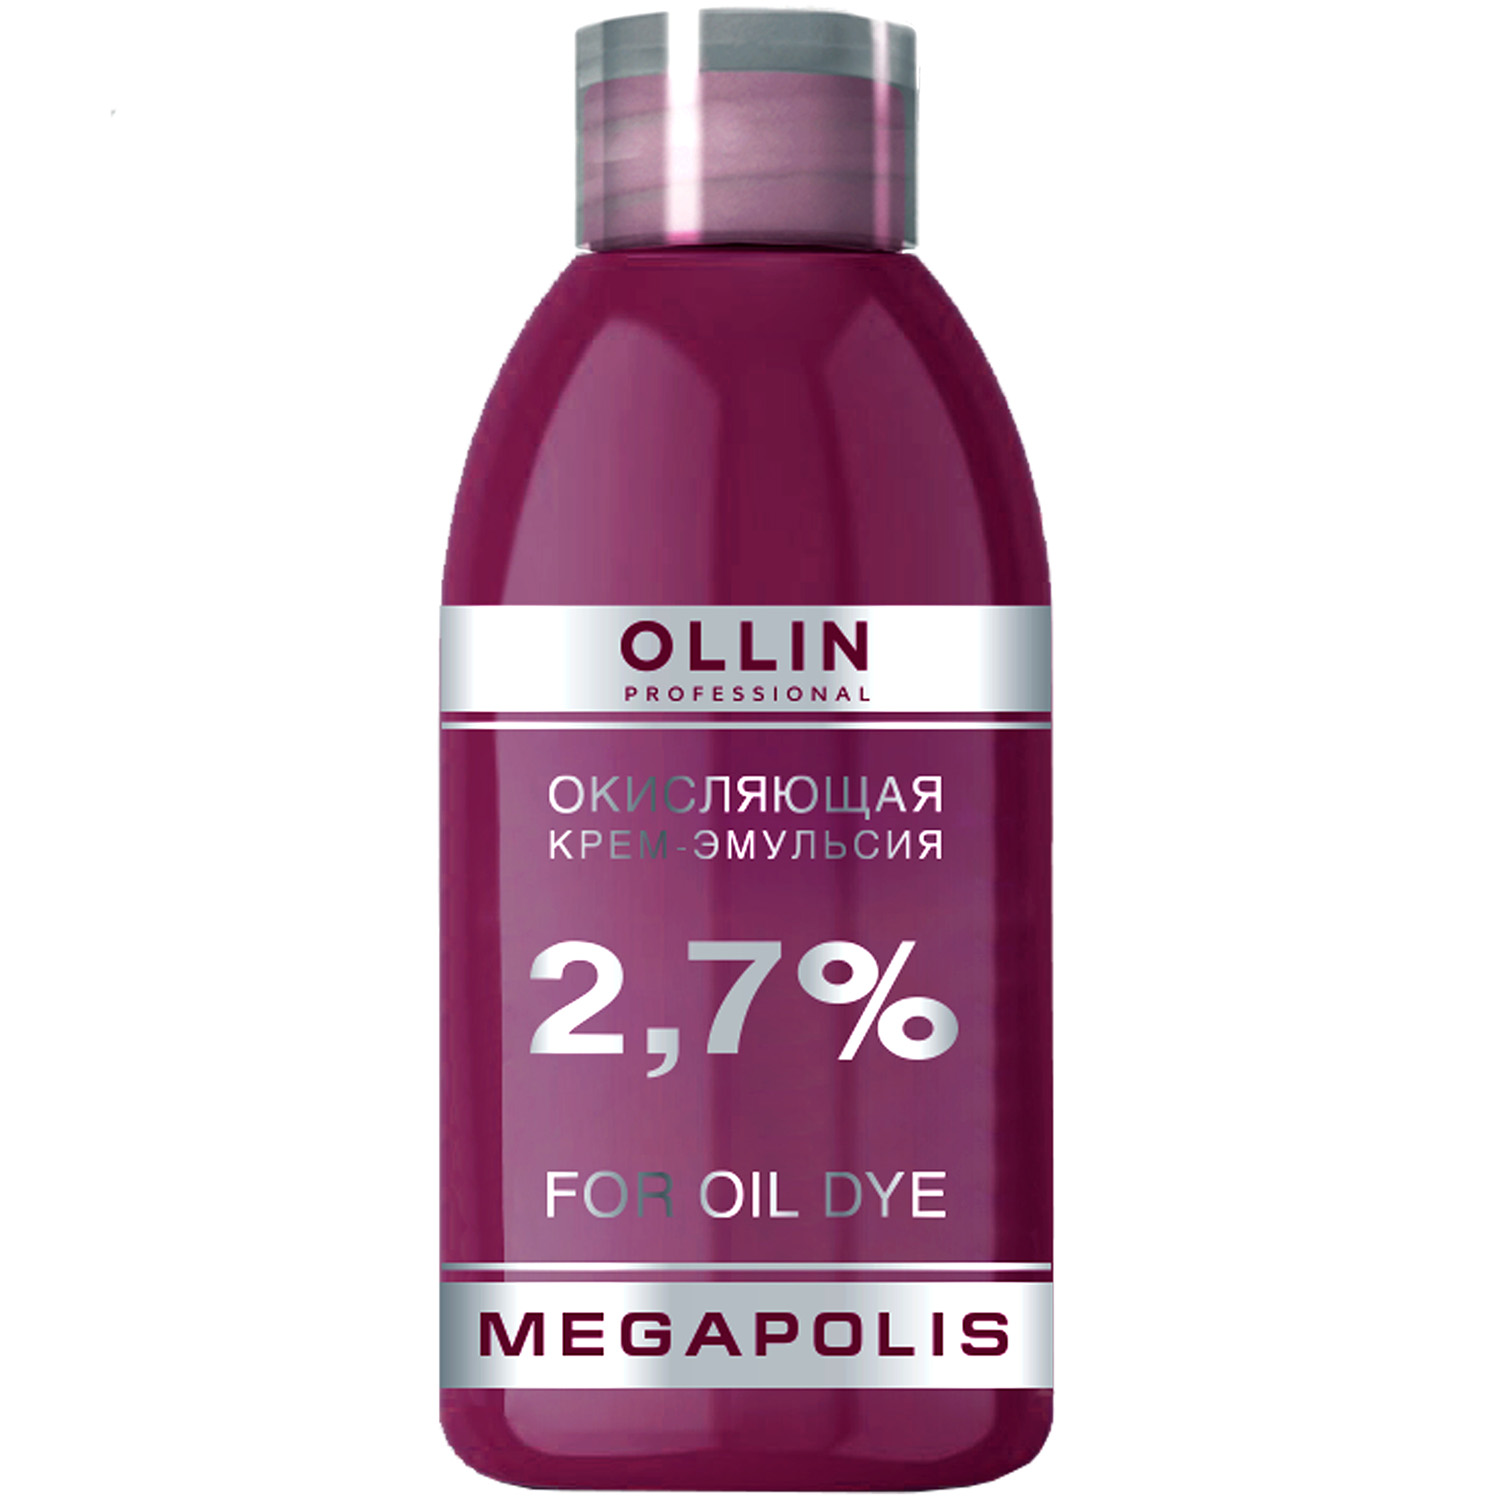 Ollin Professional Окисляющая крем-эмульсия 2,7%, 75 мл (Ollin Professional, Megapolis)